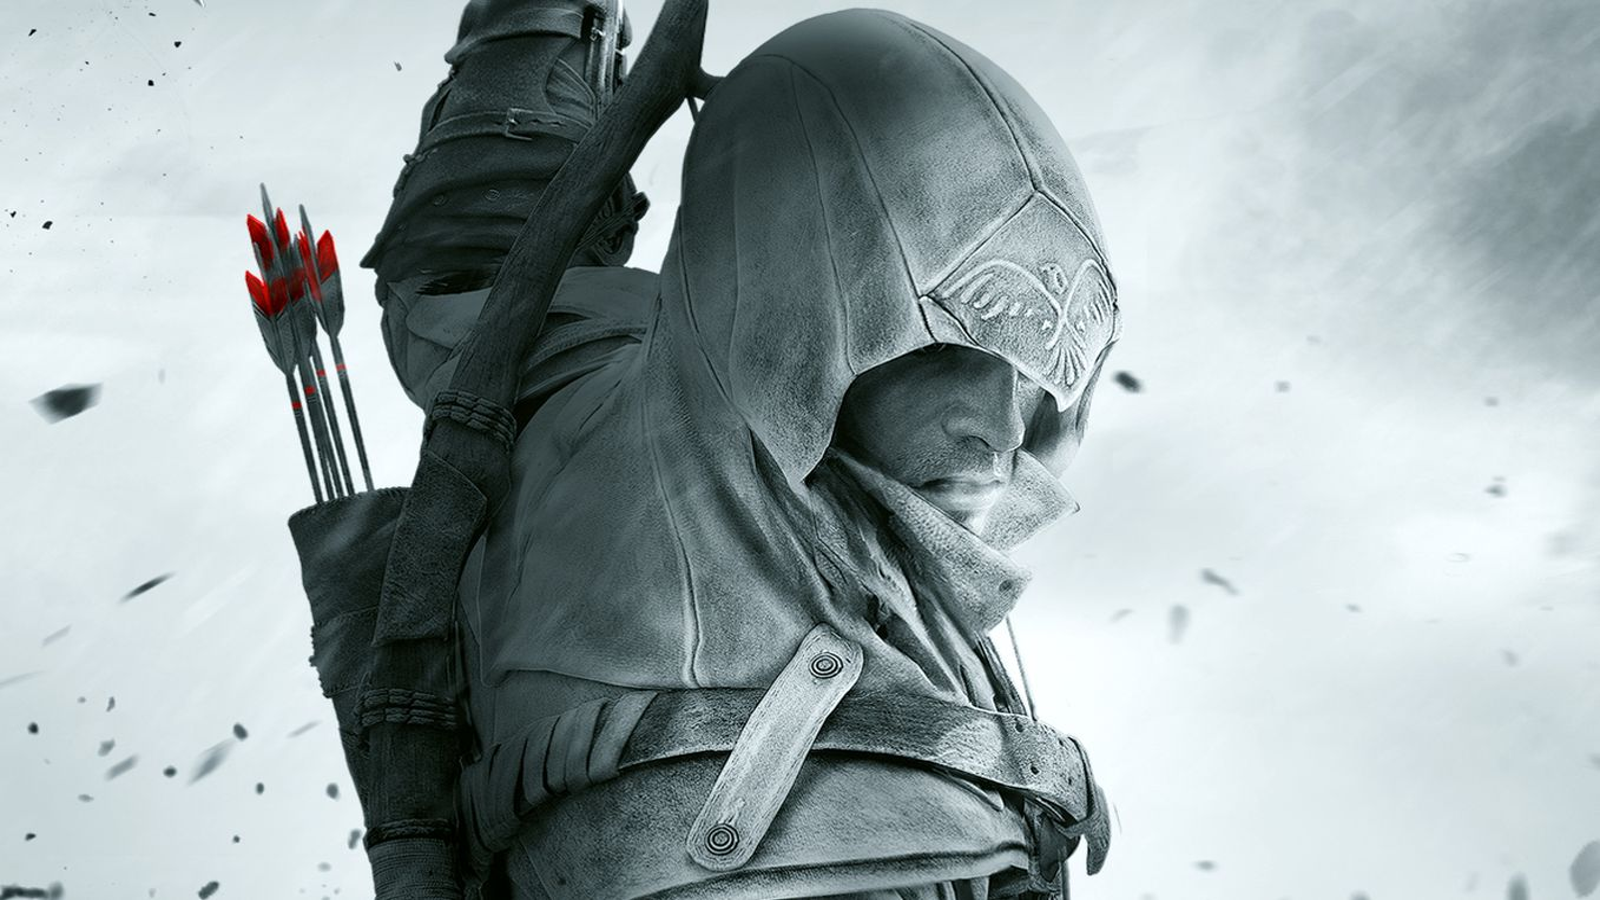 Confira os requisitos para rodar Assassin's Creed 3 Remastered no PC